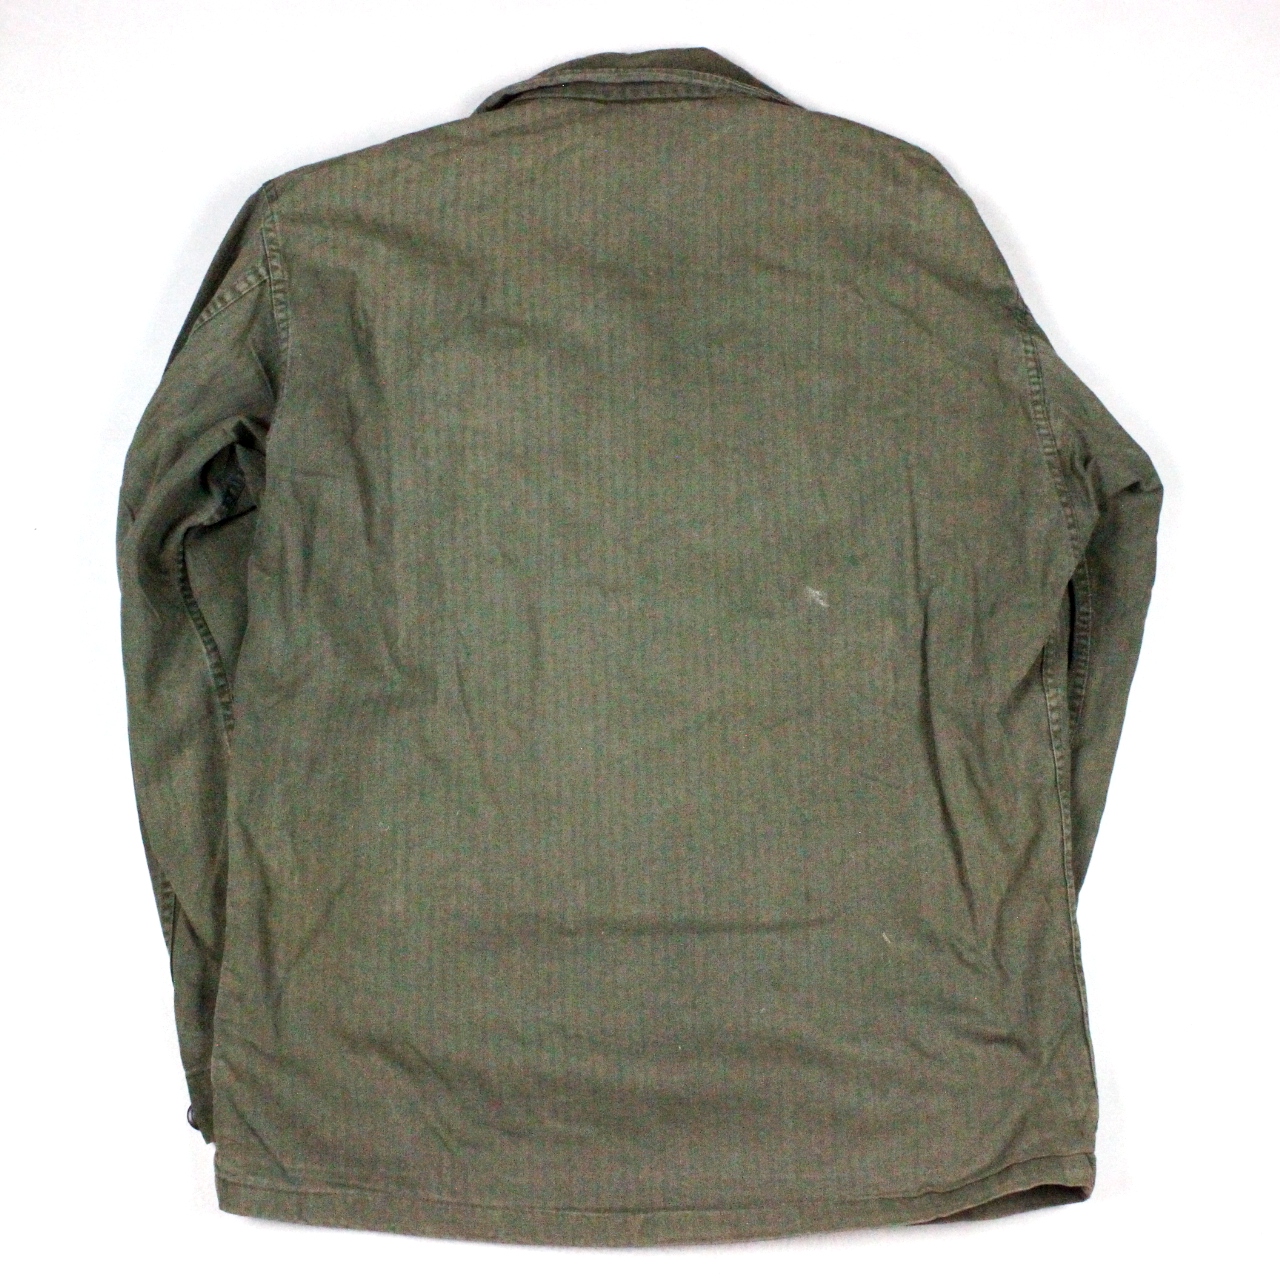 US Army 2nd pattern HBT shirt - Corporal rank